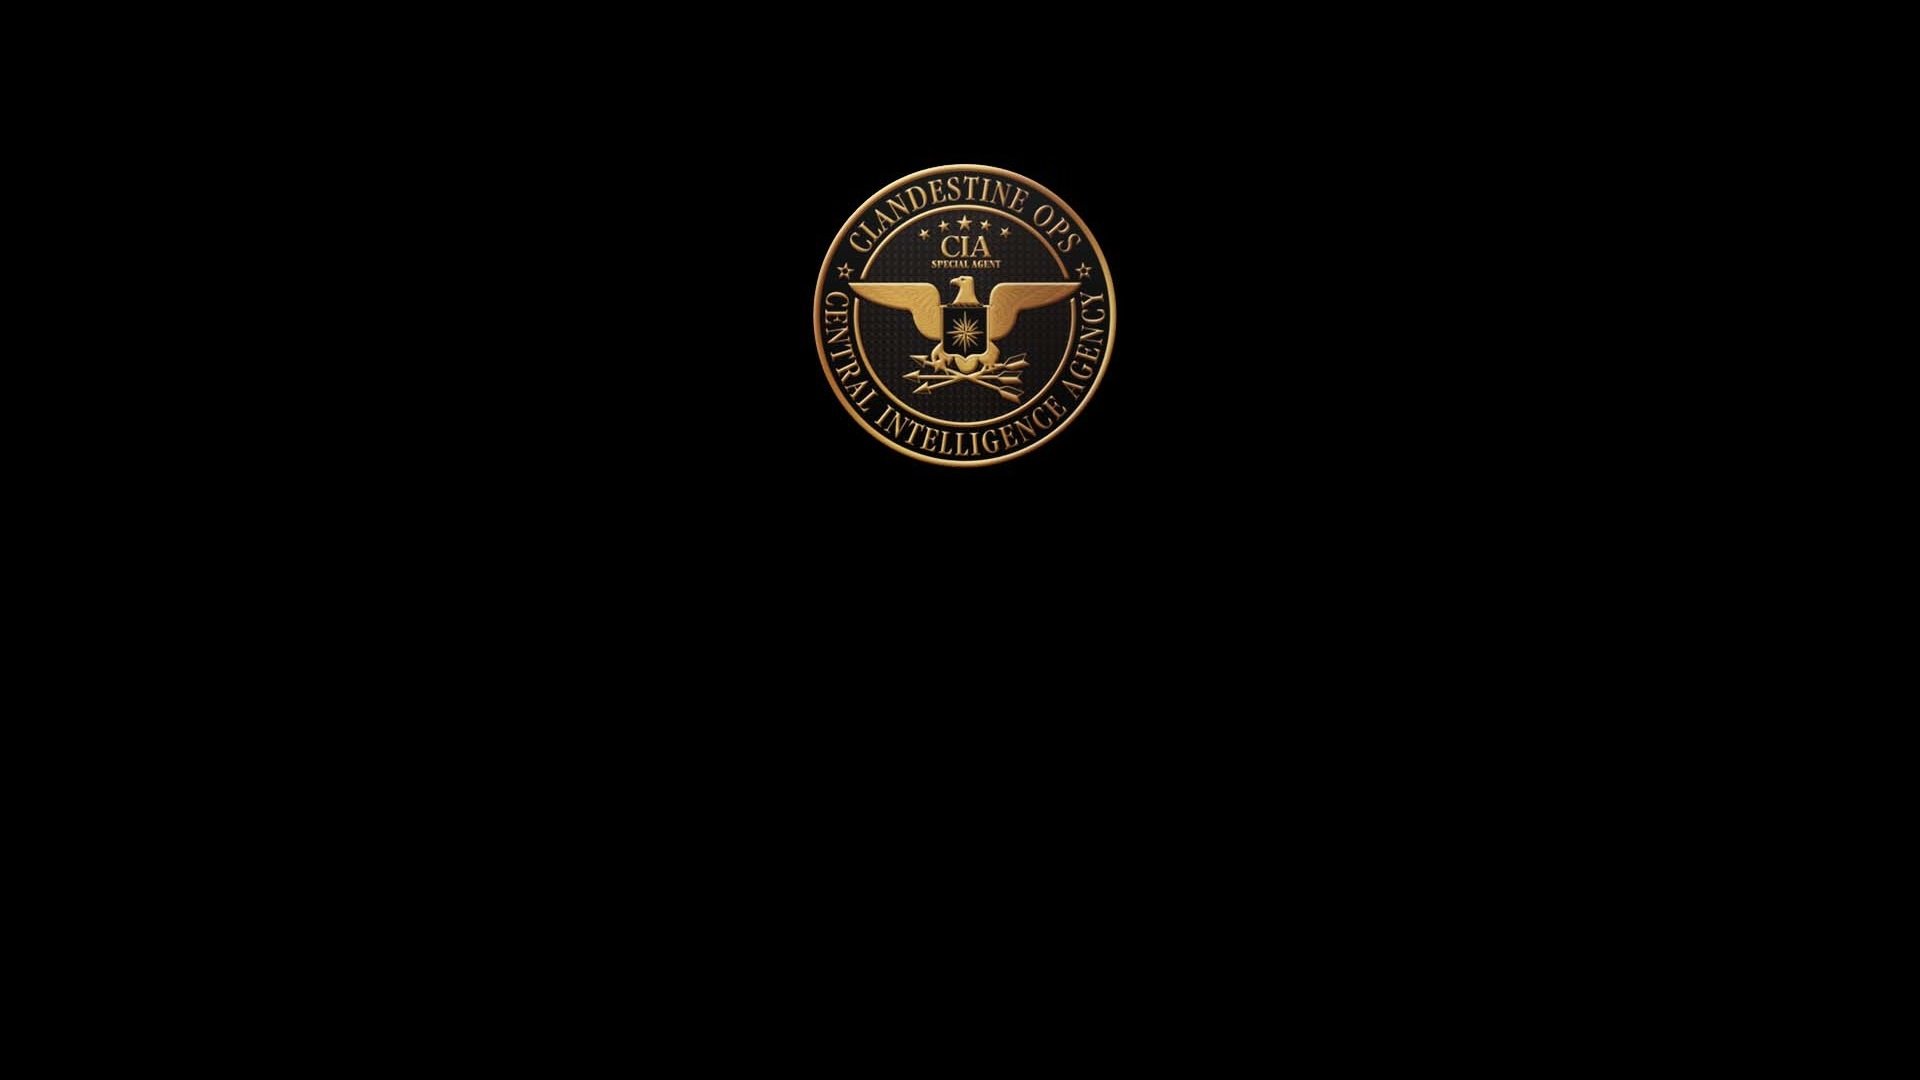 px Agency america Central Cia crime Intelligence logo Spy USA High Quality Wallpaper, High Definition Wallpaper